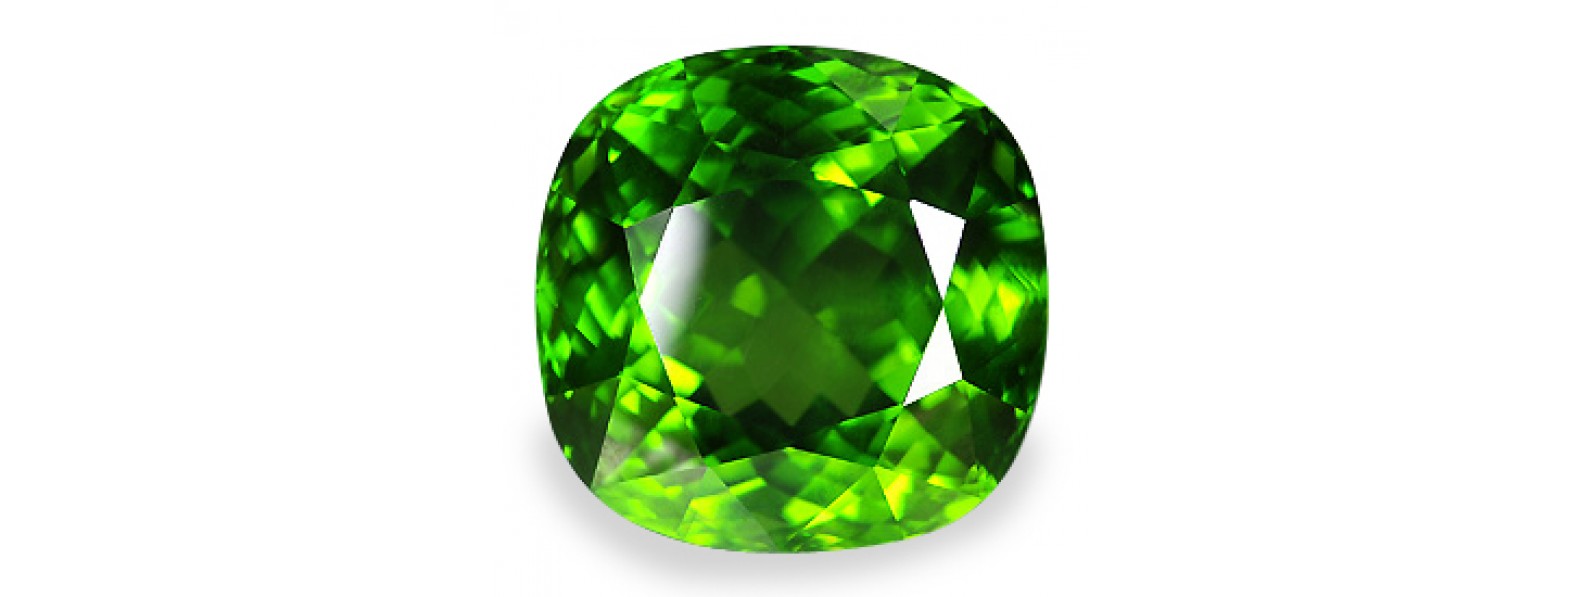 Green Tourmaline image